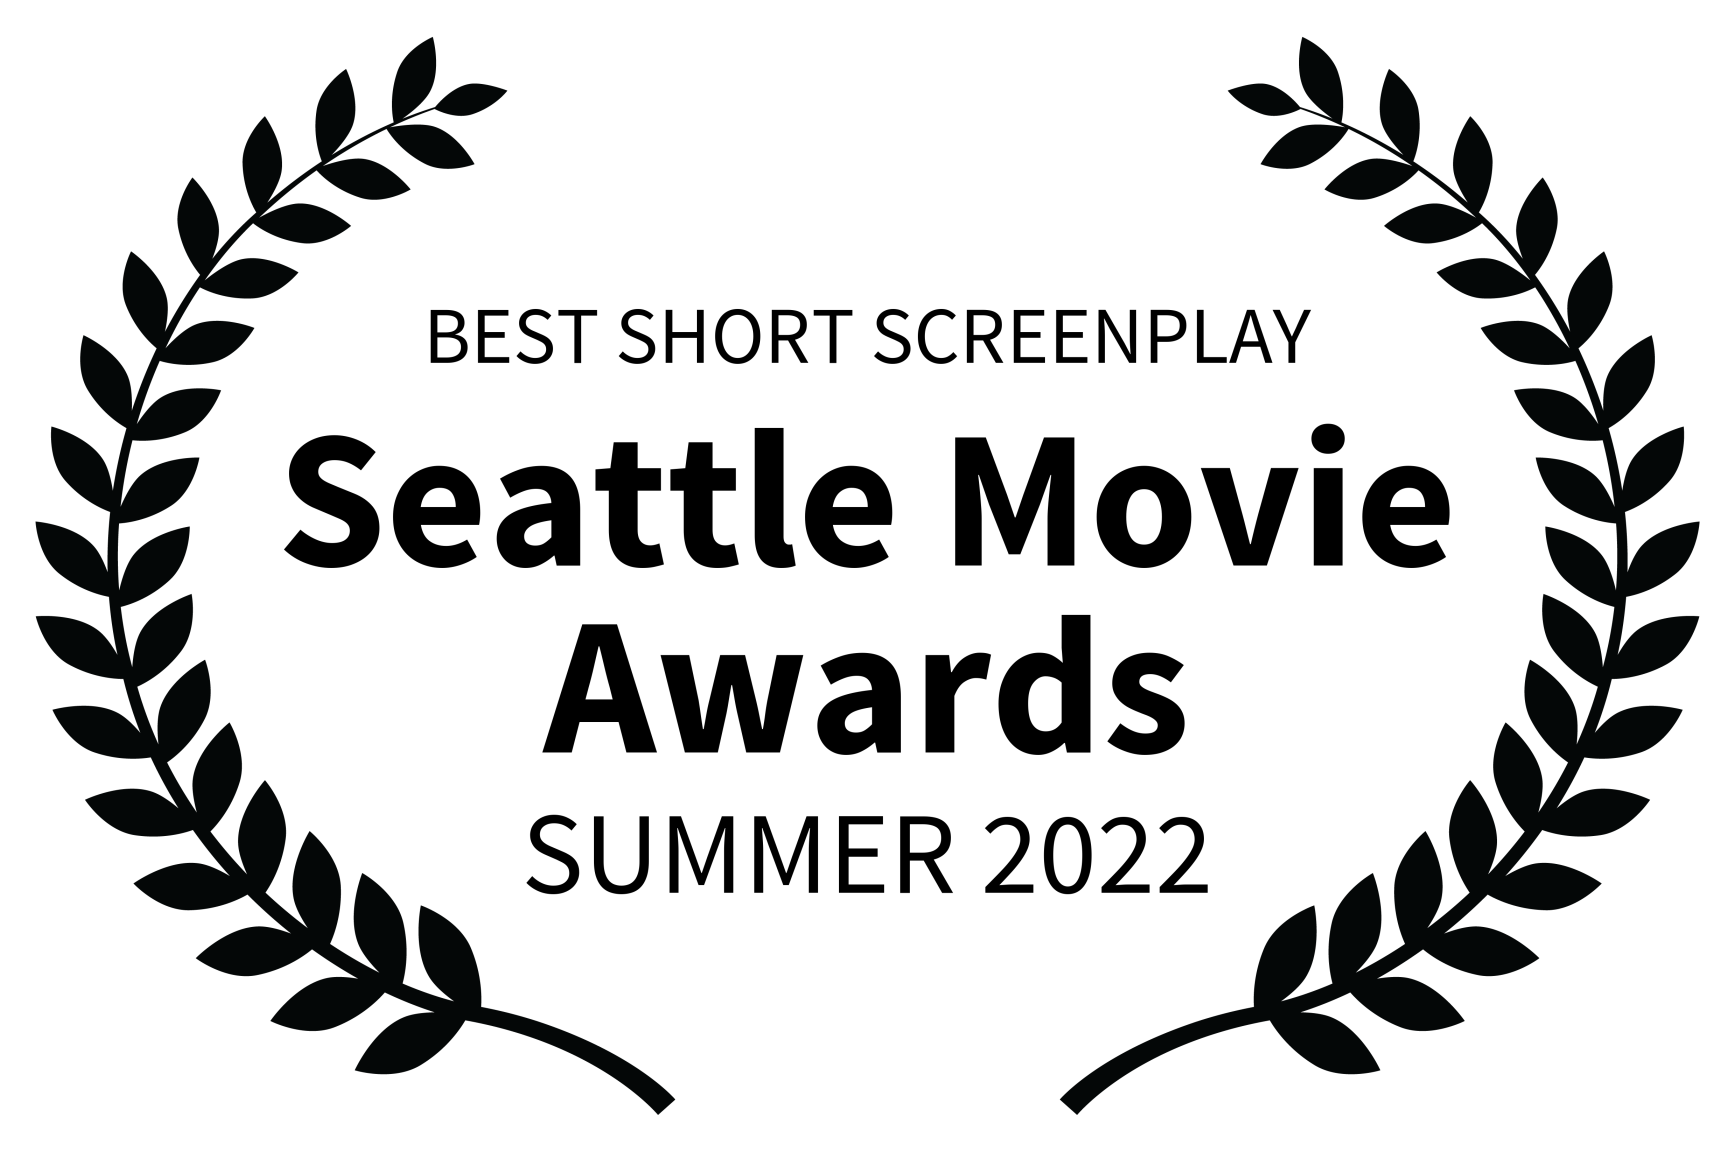 Fourth Down Award Seattle Movie Award Best Short Screenplay